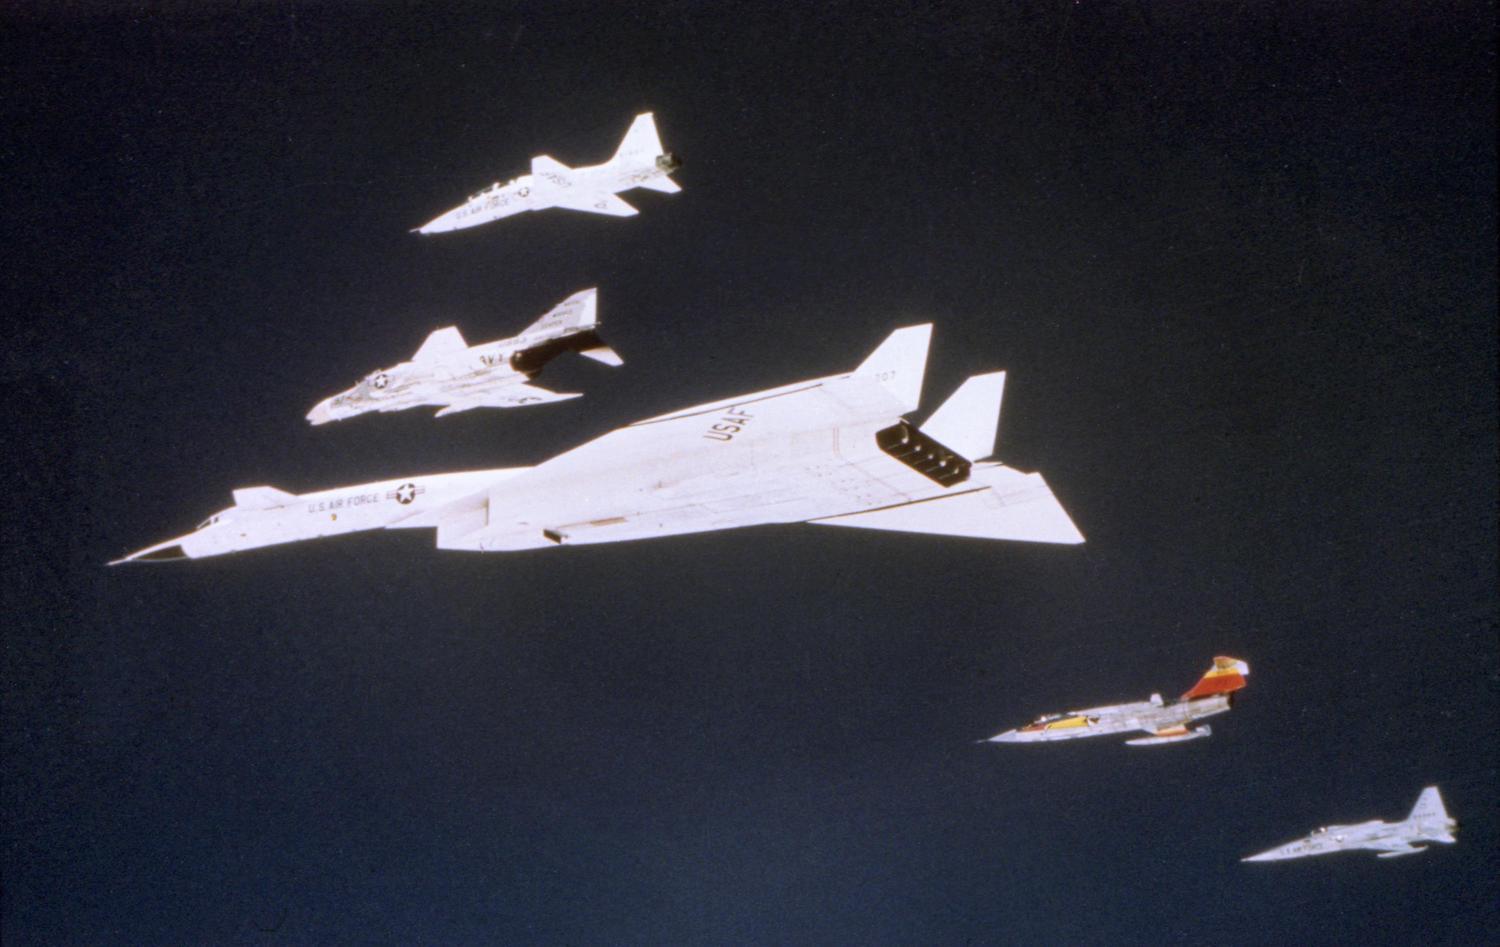 XB-70 ヴァルキリー、アメリカ史上“最大、最速”の爆撃機になれなかった